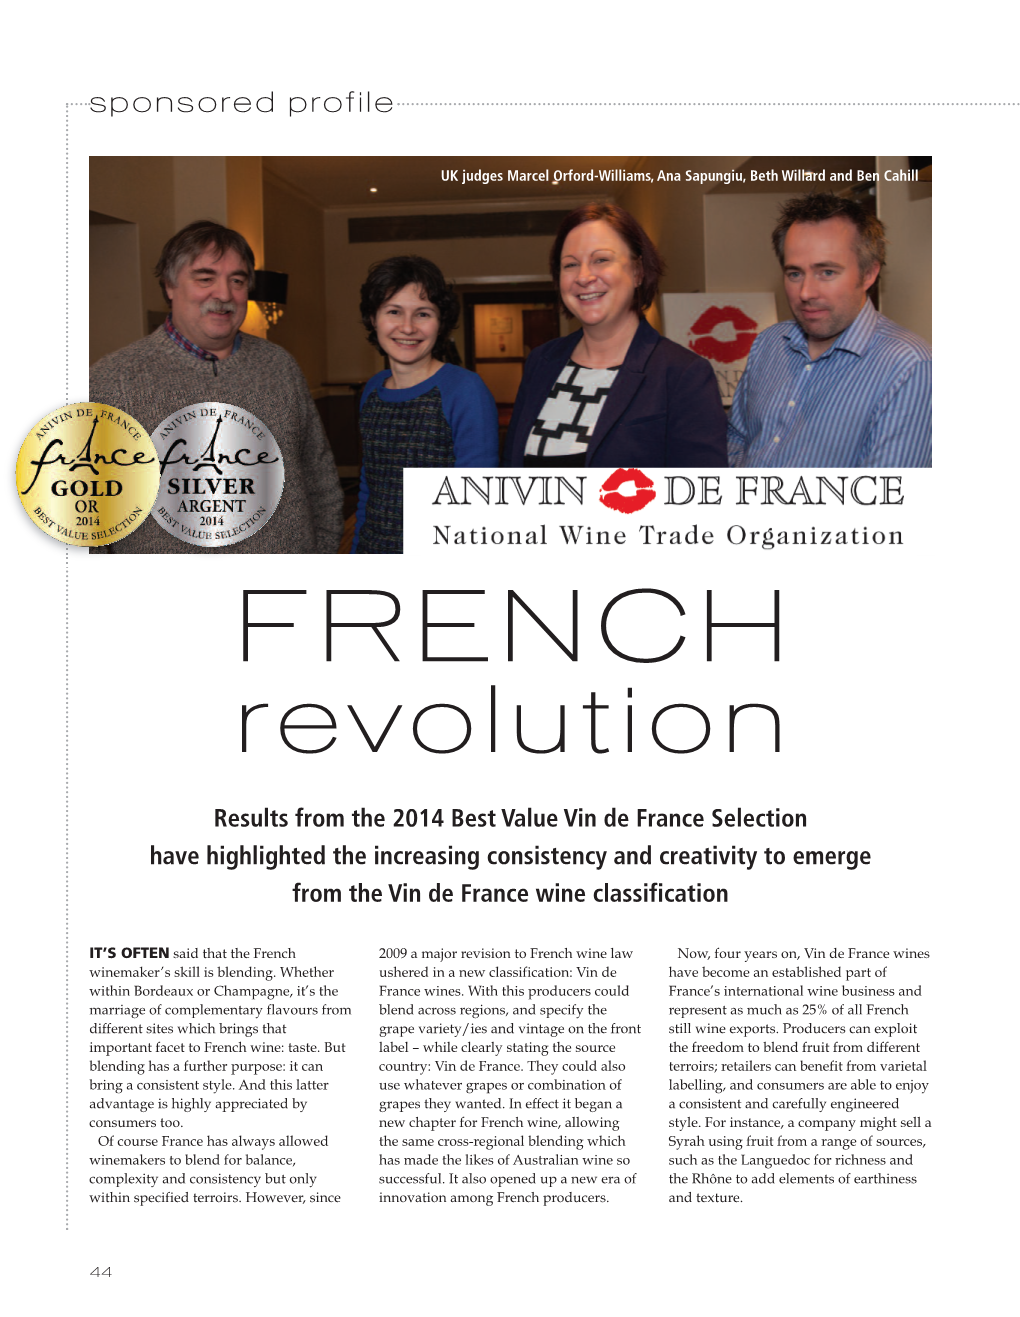 FRENCH Revolution